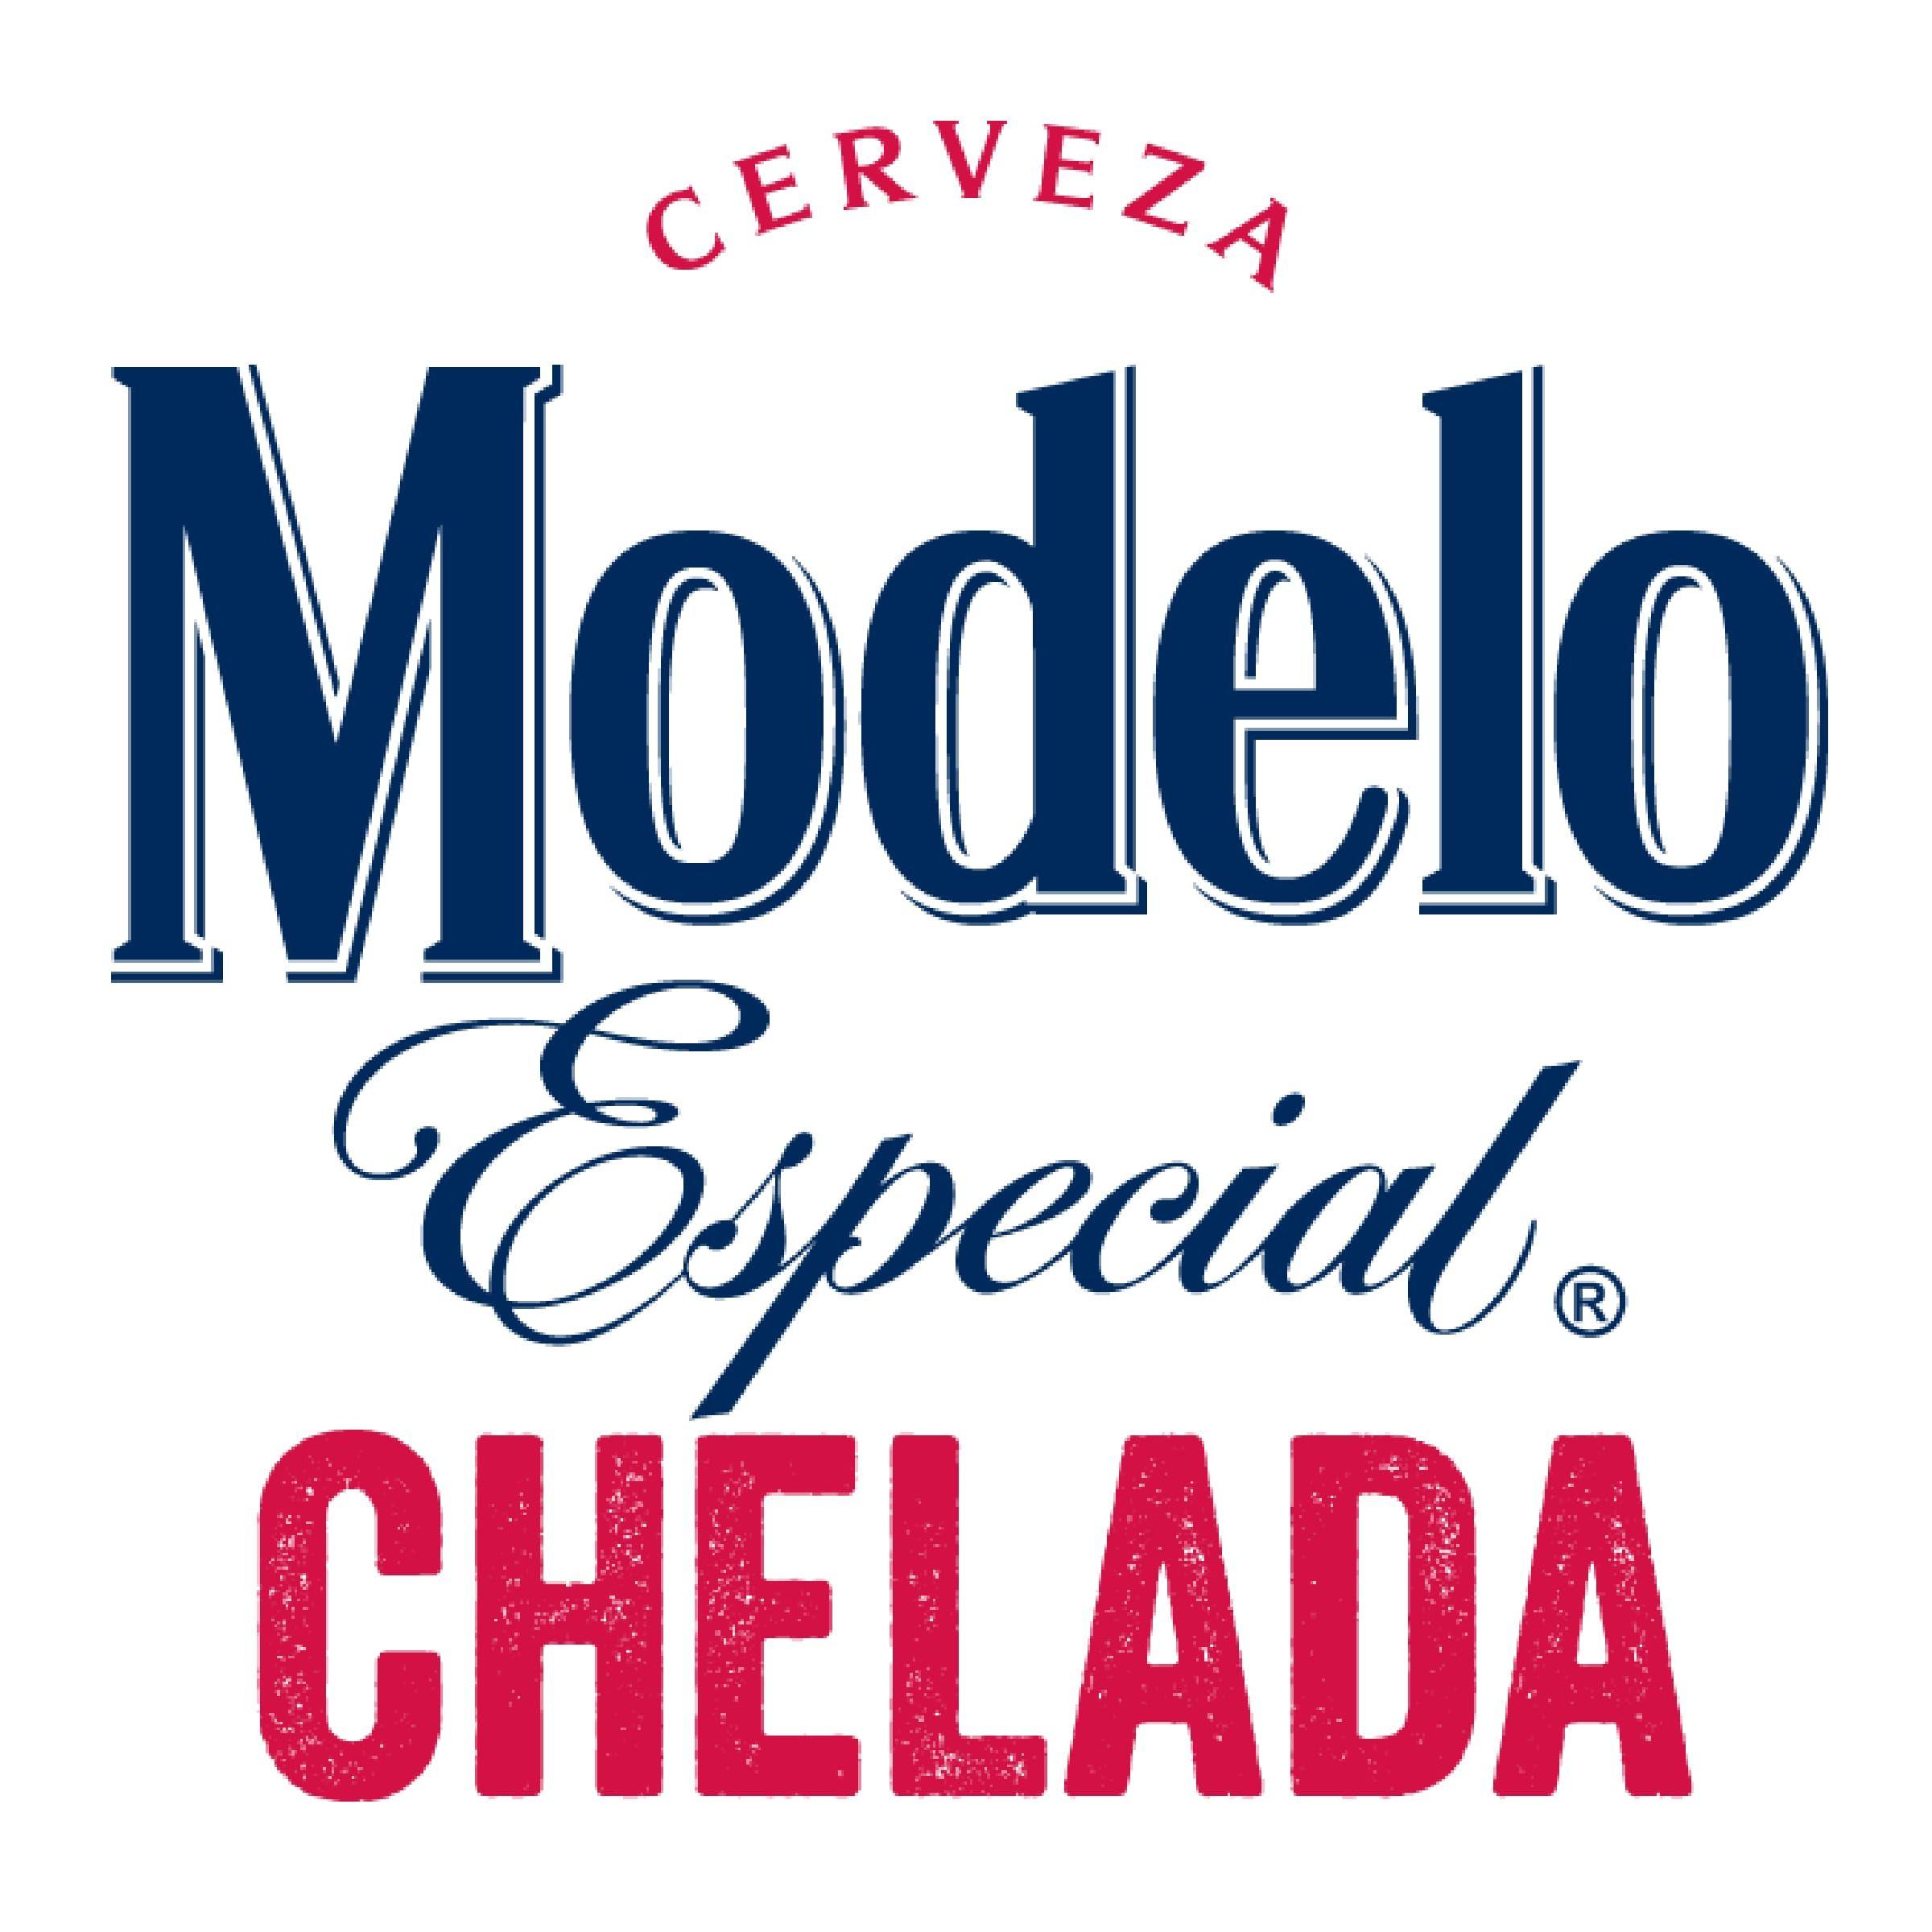 Modelo Logo - Modelo Chelada logo-1 - Bud Distributing